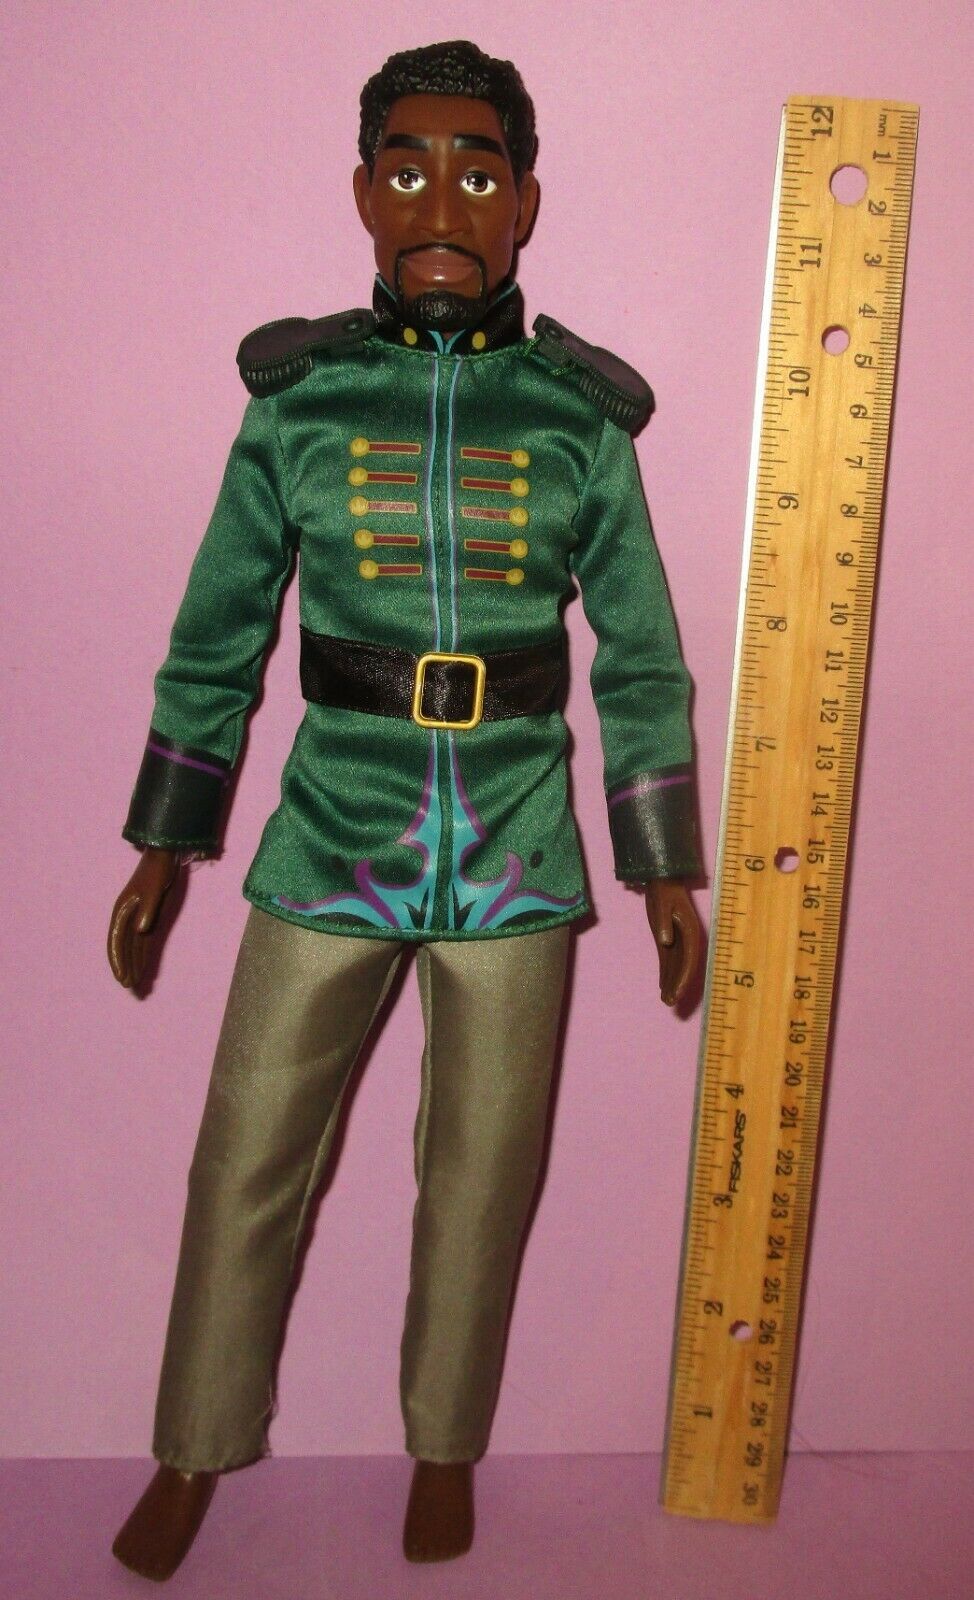 Primary image for Disney Store Deluxe Set Frozen 2 Lieutenant Mattias Barbie Ken Size 11" Doll AA 